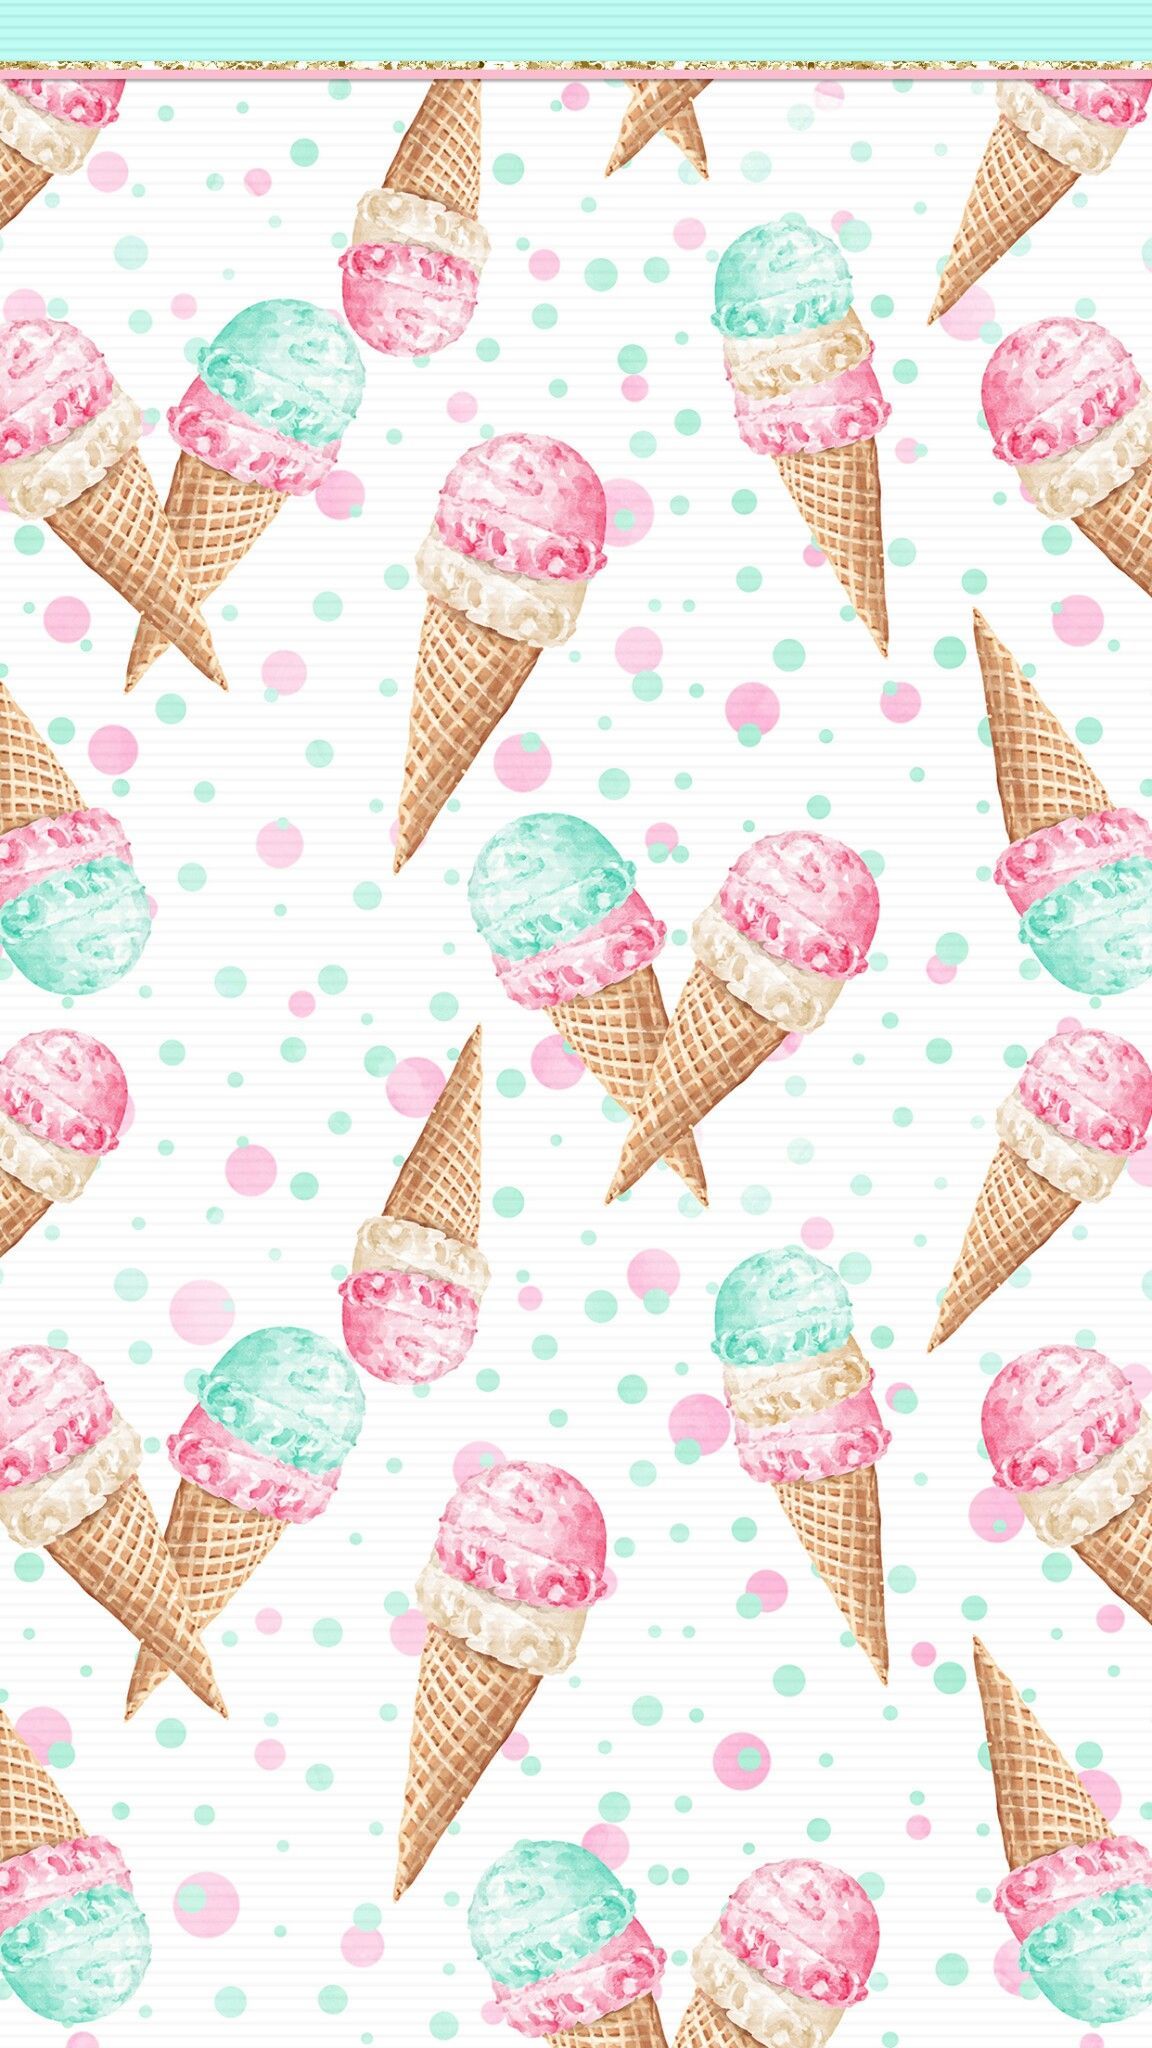 Cute Ice Cream Wallpaper For iPhone